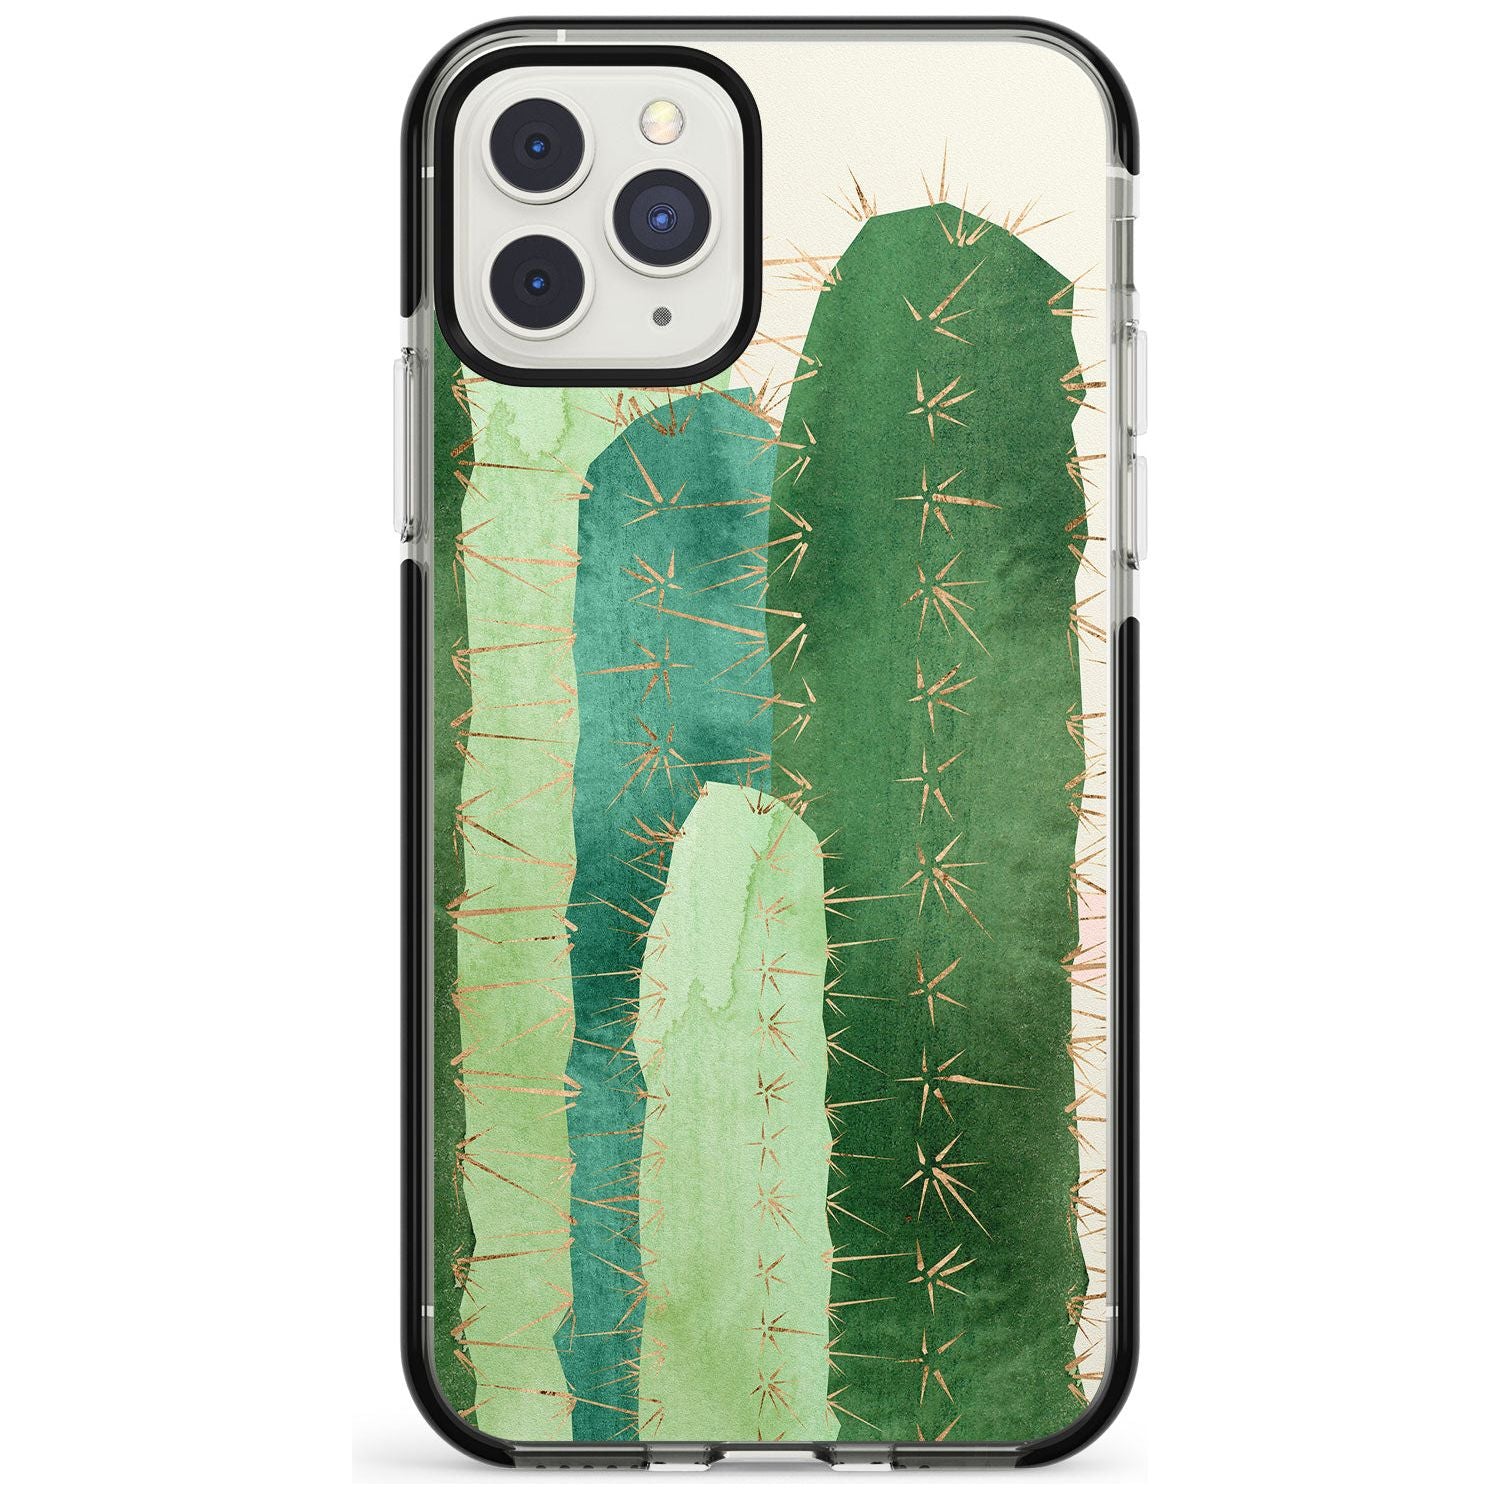 Large Cacti Mix Design Black Impact Phone Case for iPhone 11 Pro Max